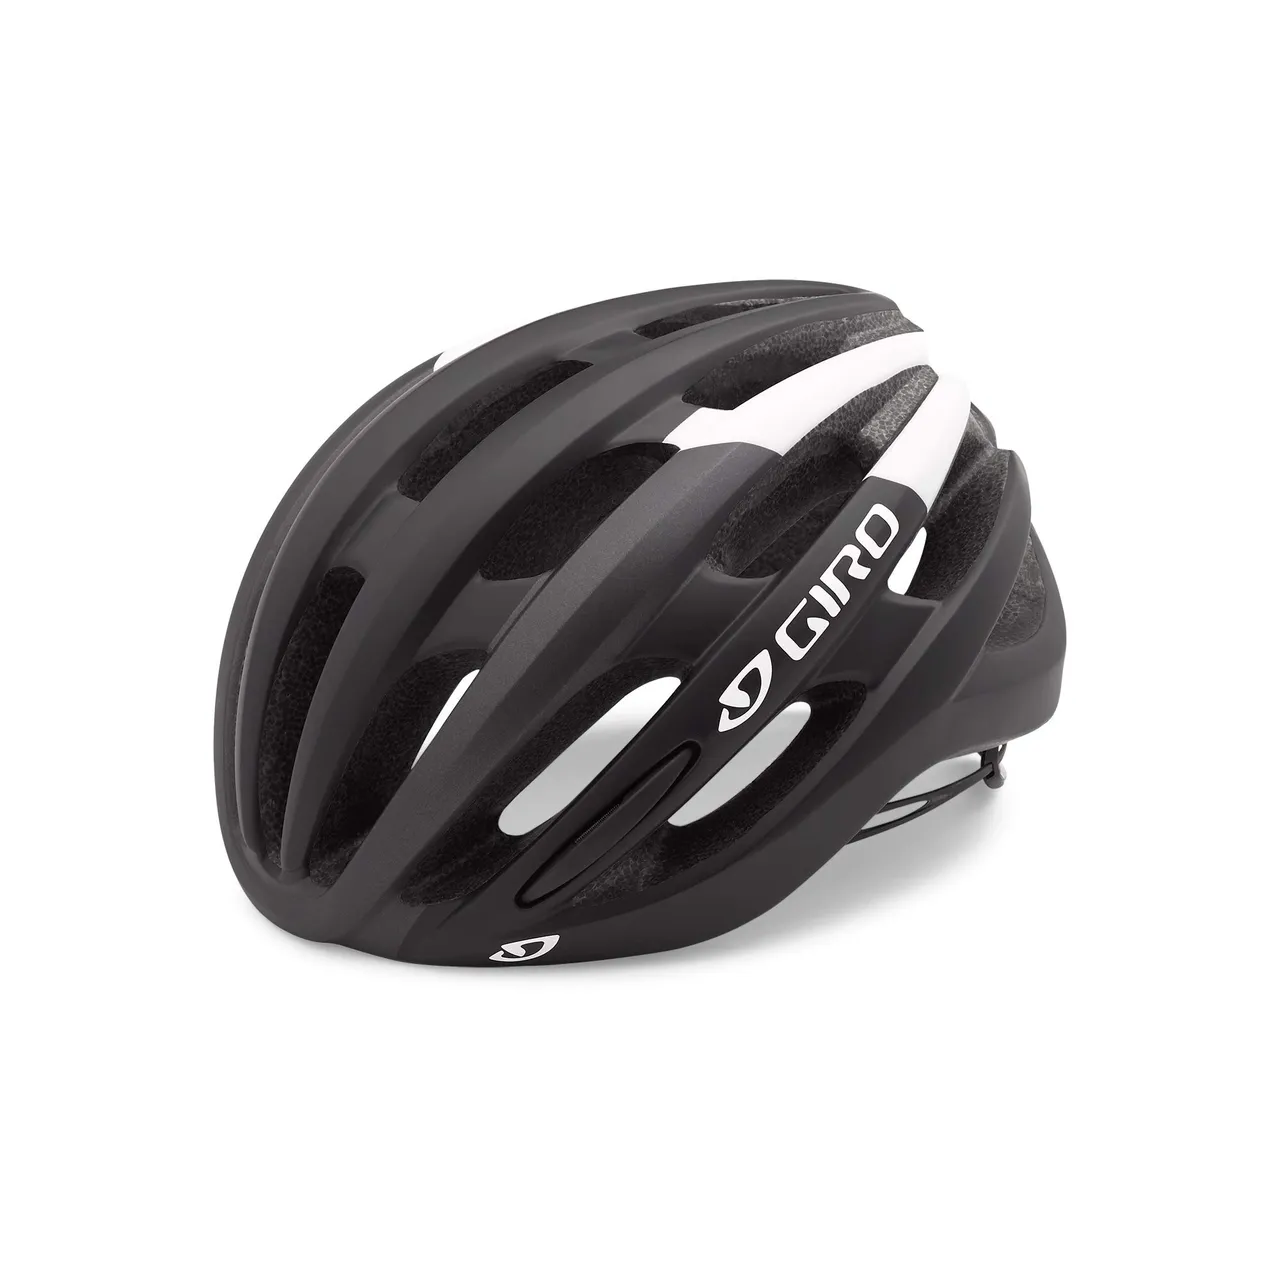 Giro Helm Foray, Matte Black/White, S (51-55 cm)